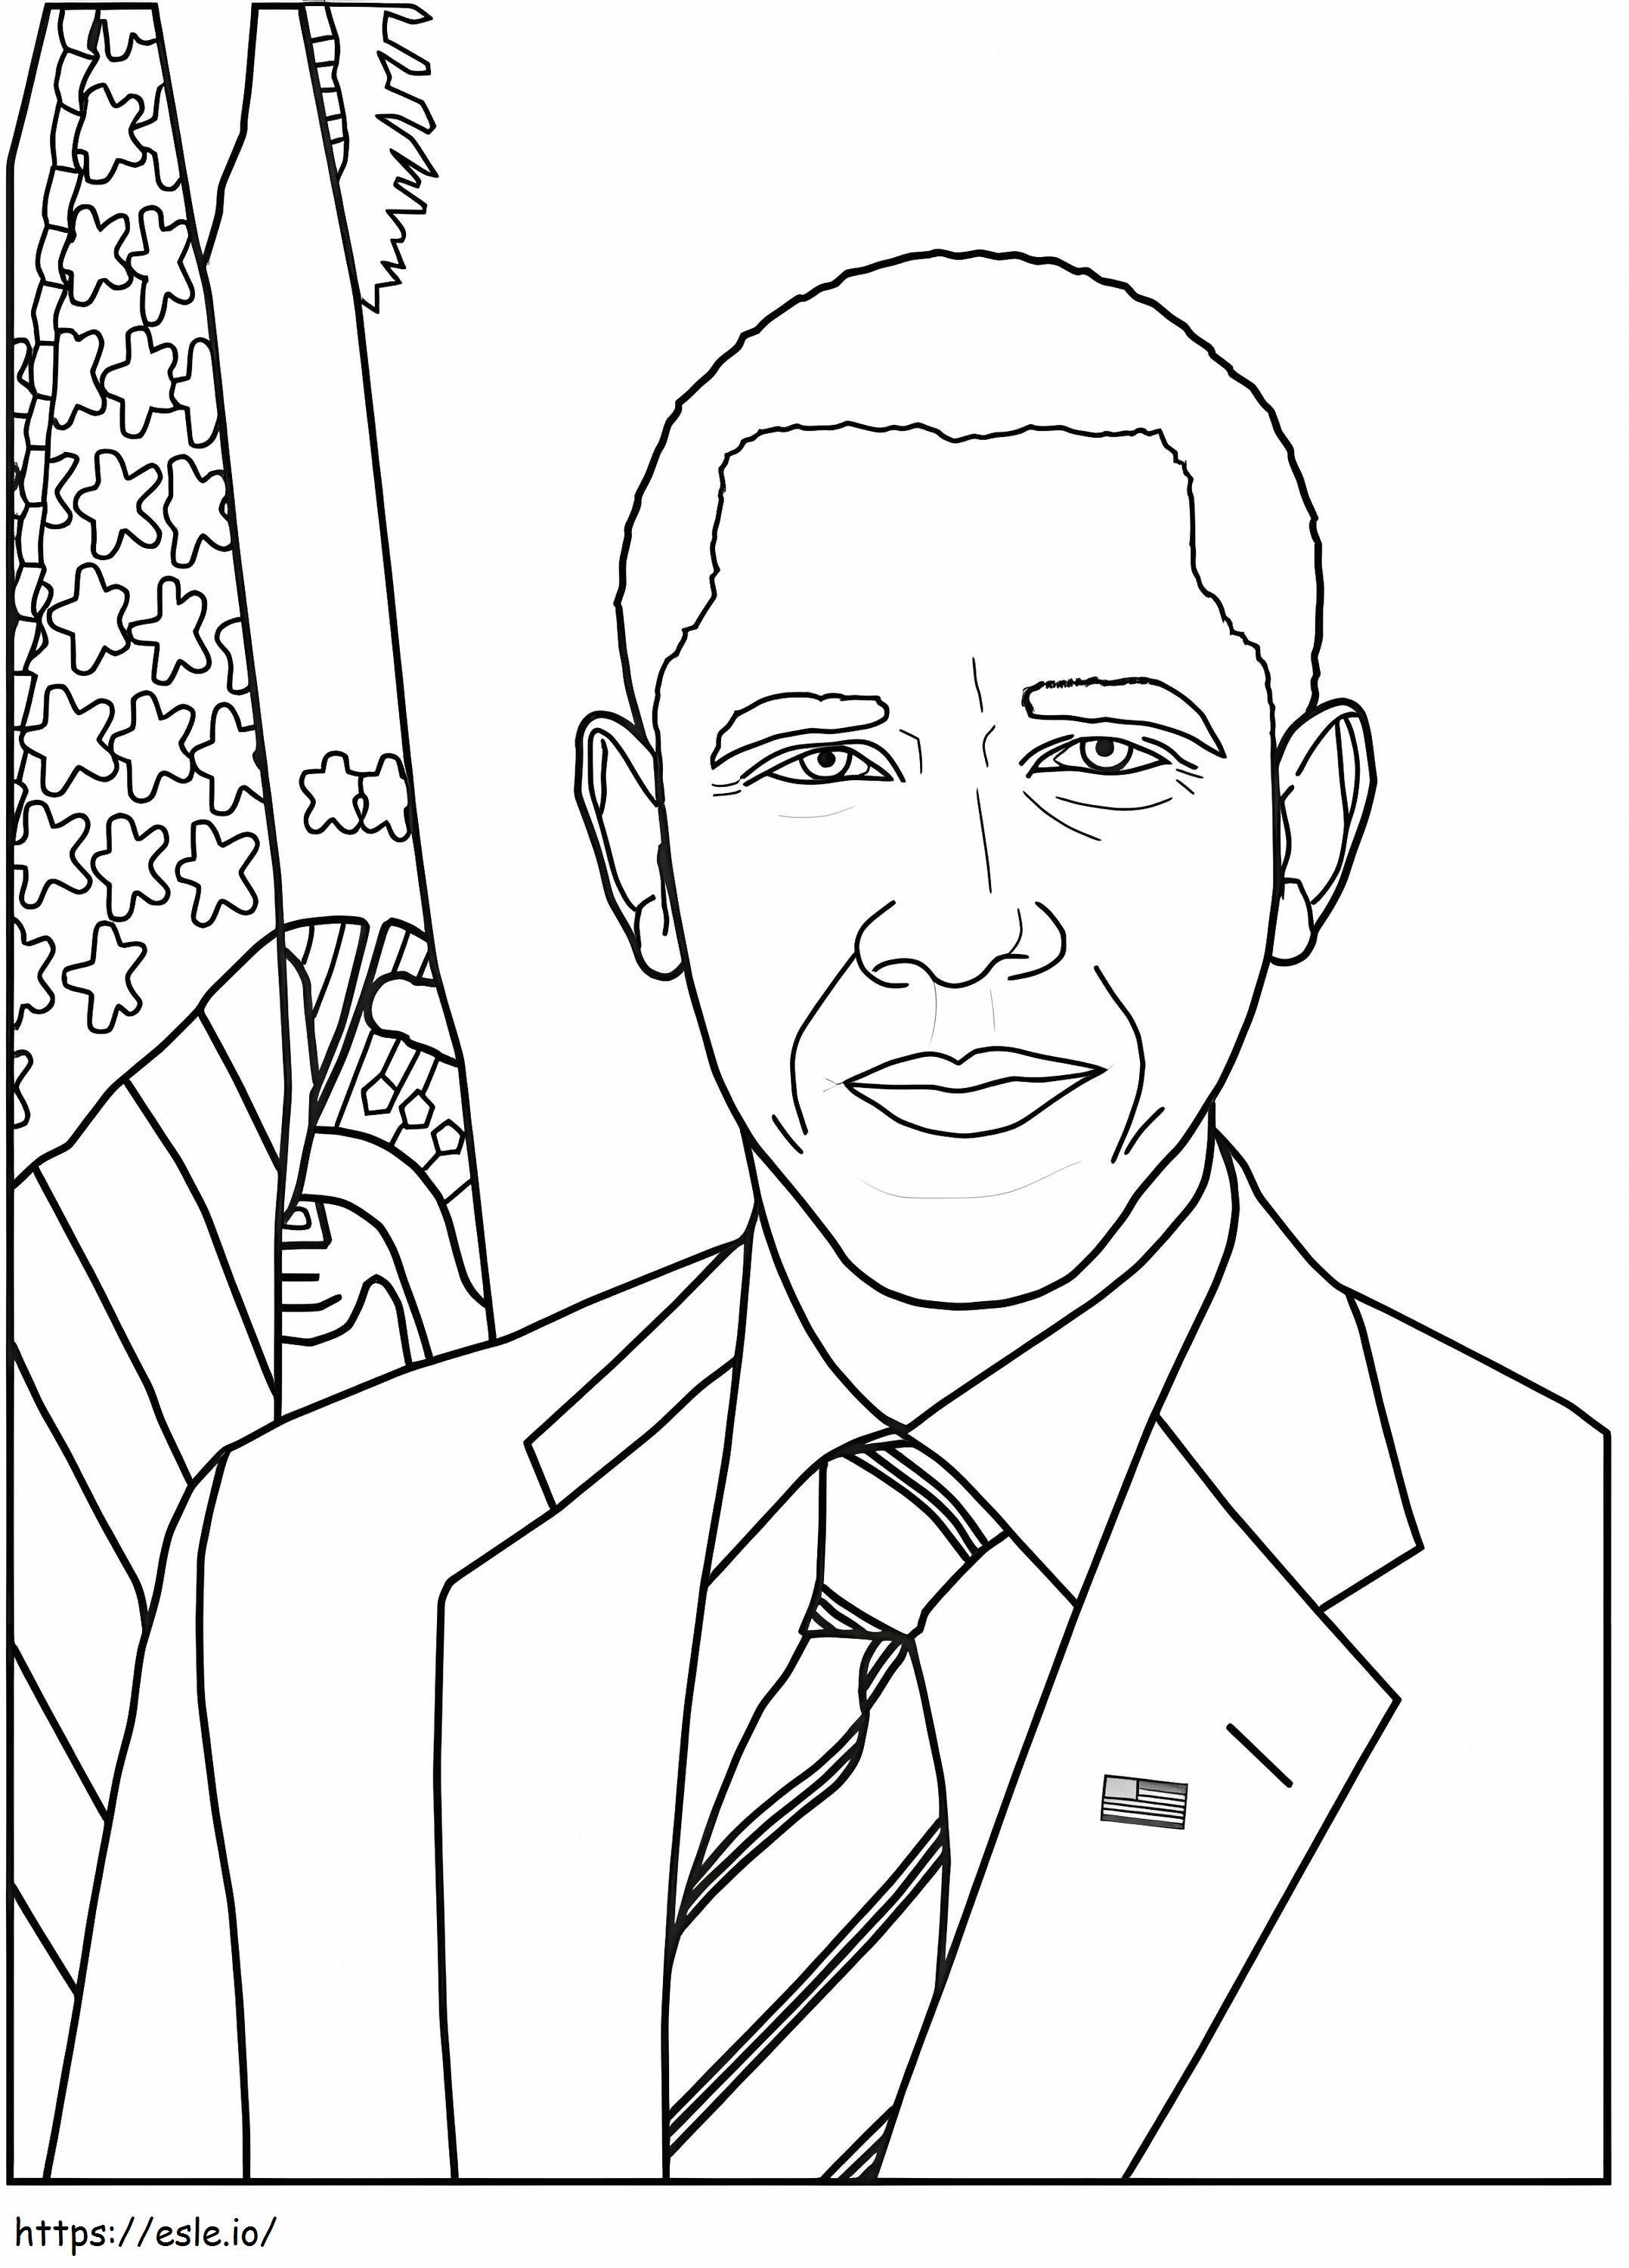 Cara De Obama da colorare